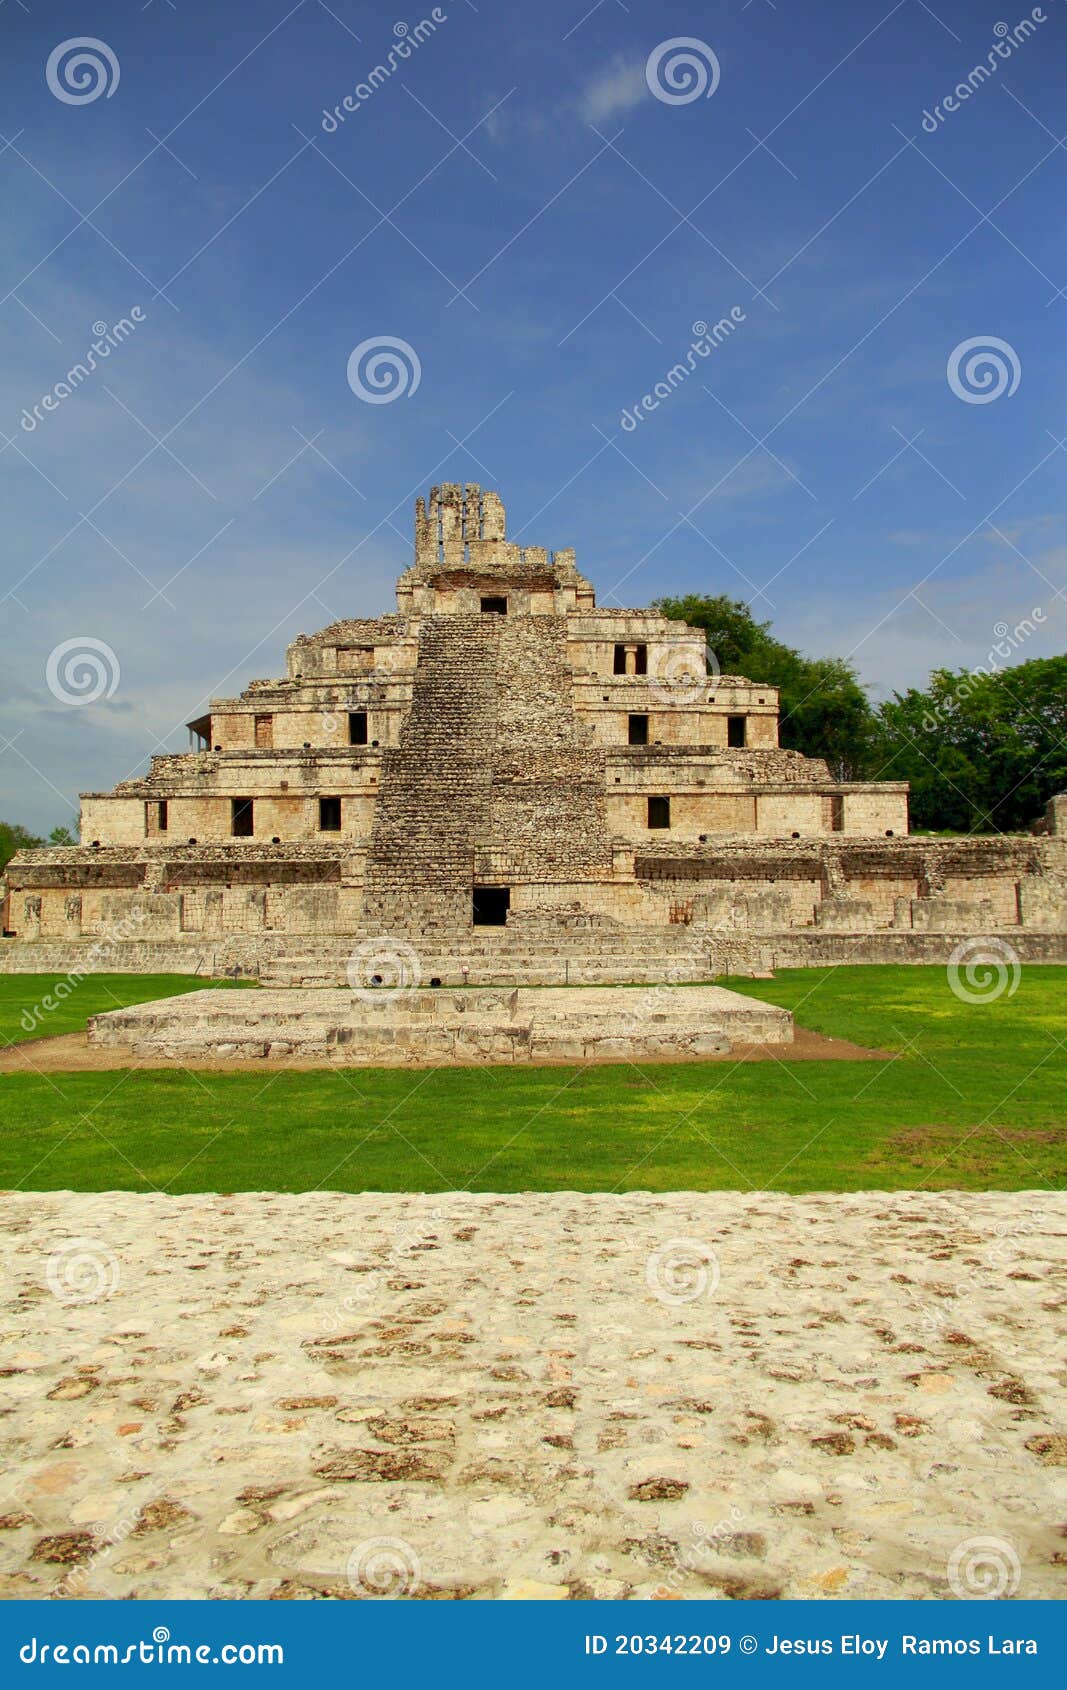 mayan pyramids in edzna campeche mexico ii